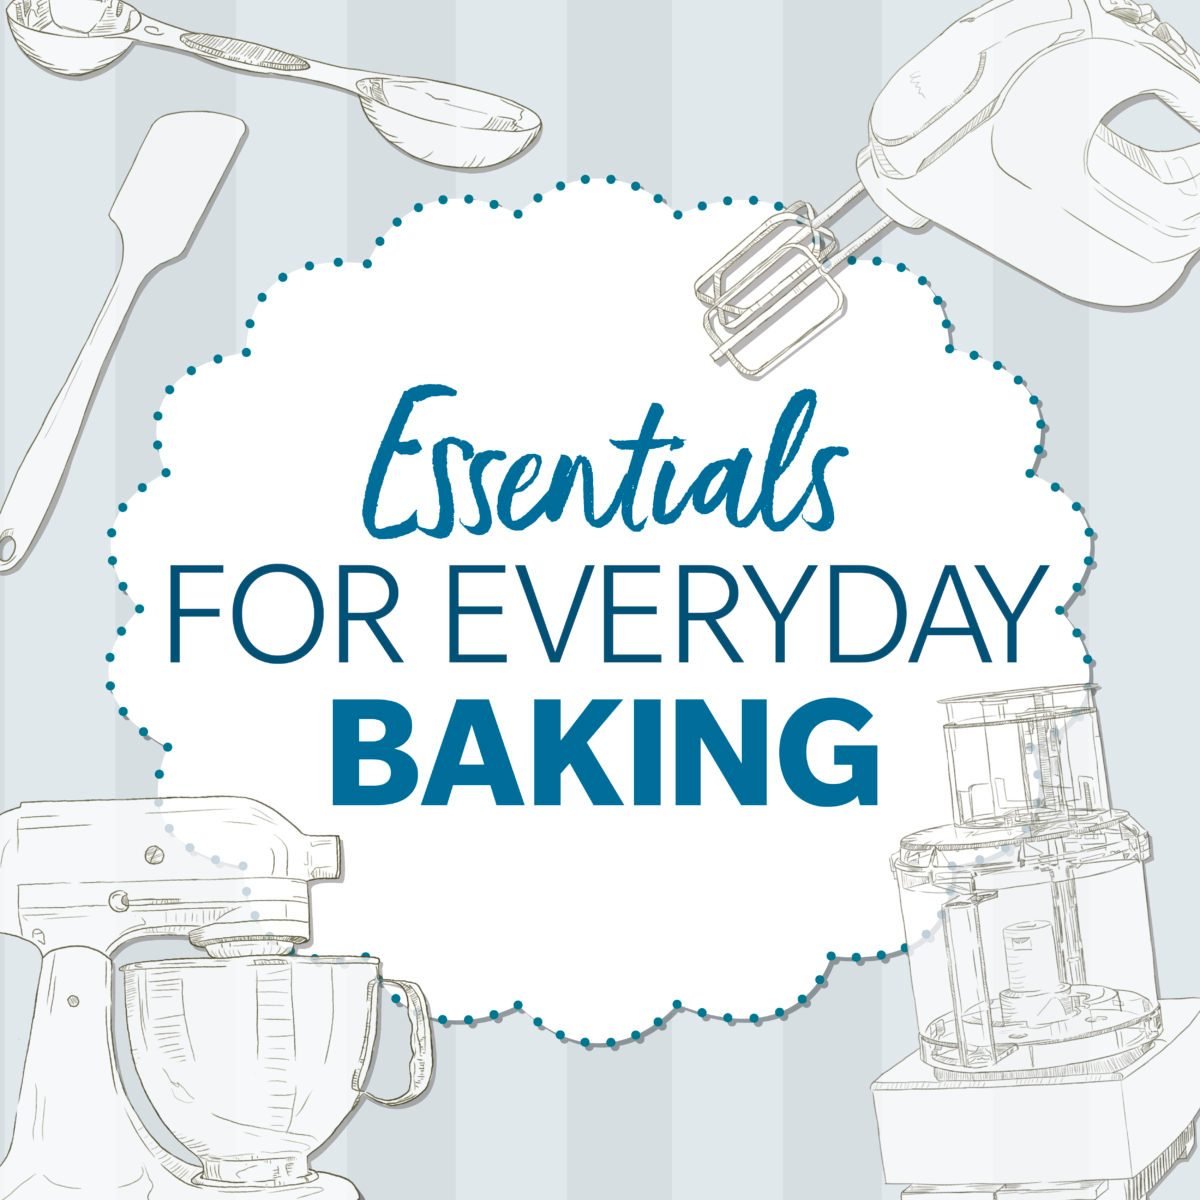 https://www.tasteofhome.com/wp-content/uploads/2019/07/essentials-for-everyday-baking-e1566580057301.jpg